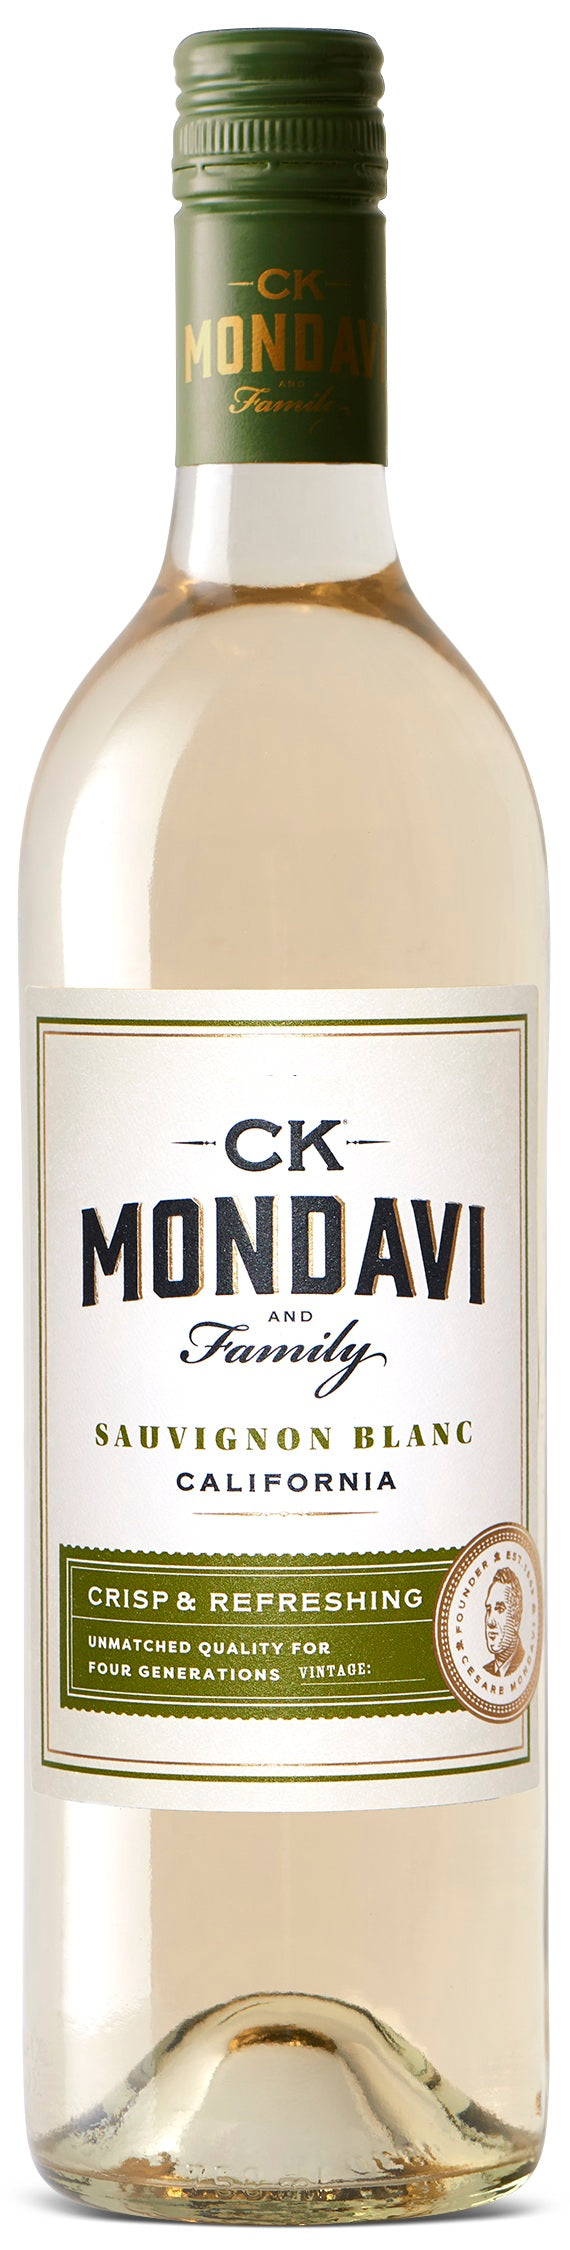 CK Mondavi Sauvignon Blanc 2019